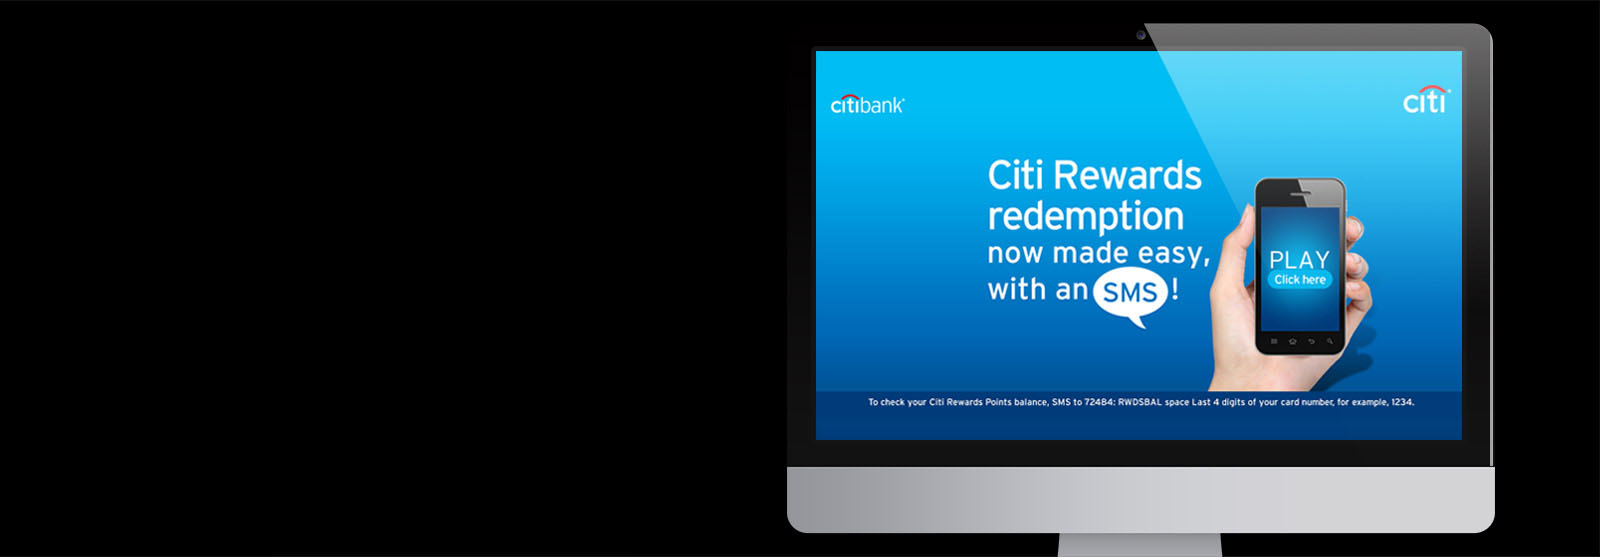 Citibank Citi Rewards Card Video